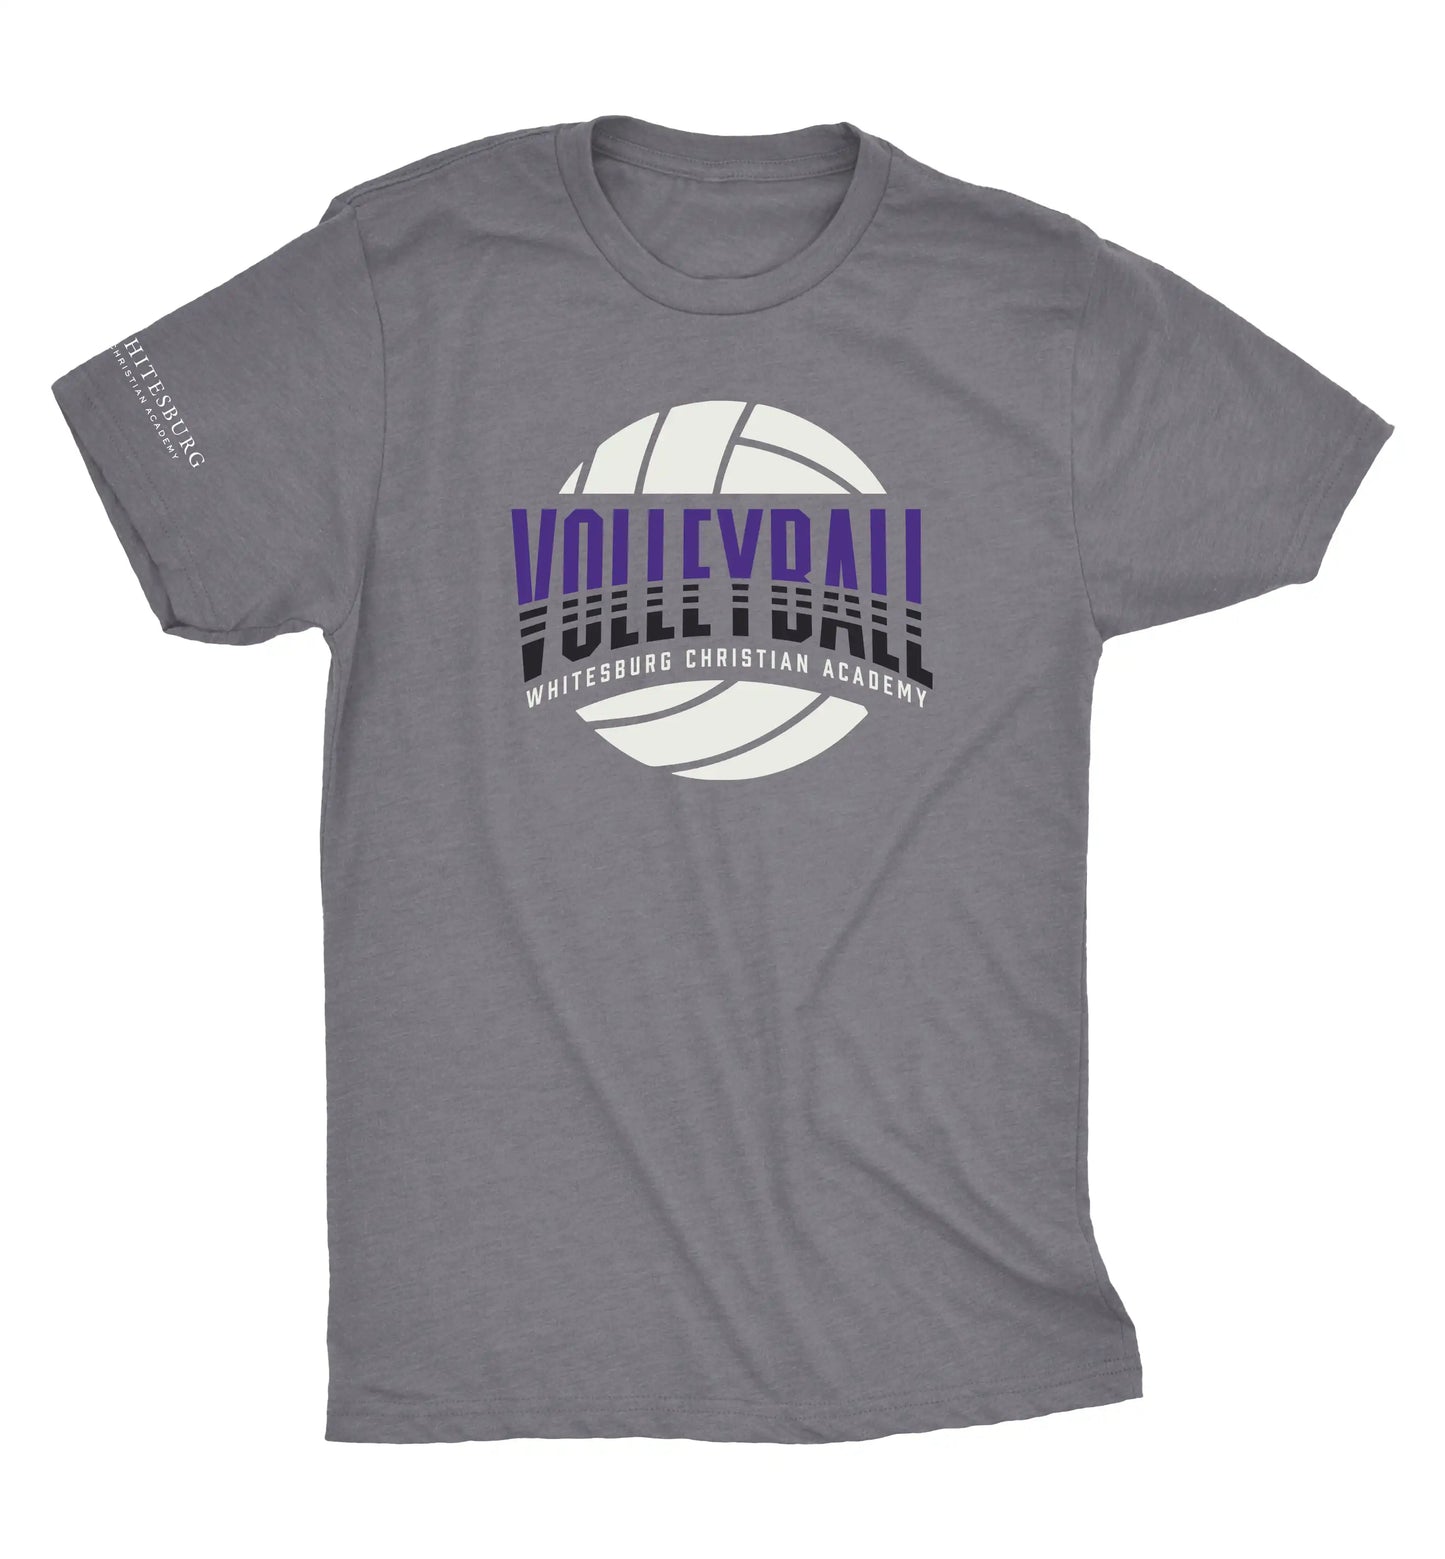 VOLLEYBALL -  Arch Design Tshirt